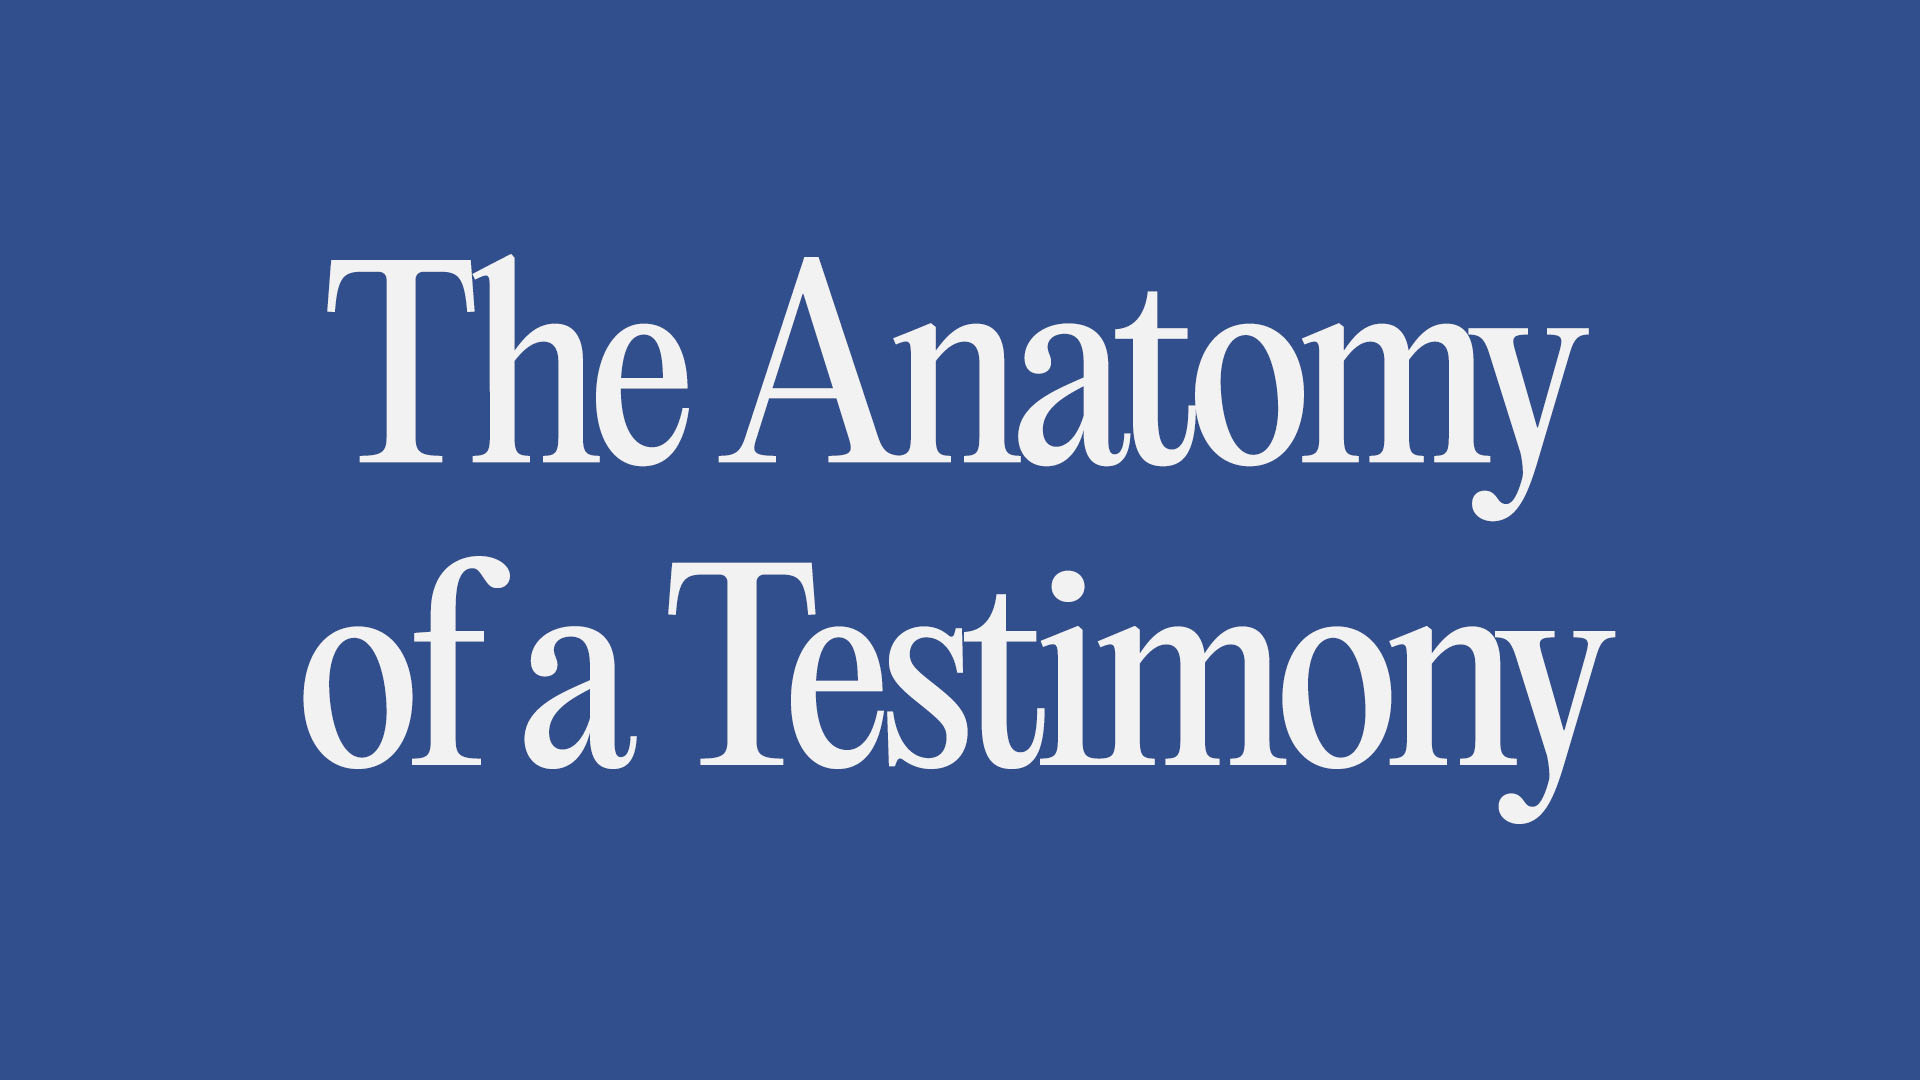 Tha Anatomy of a Testimony Image